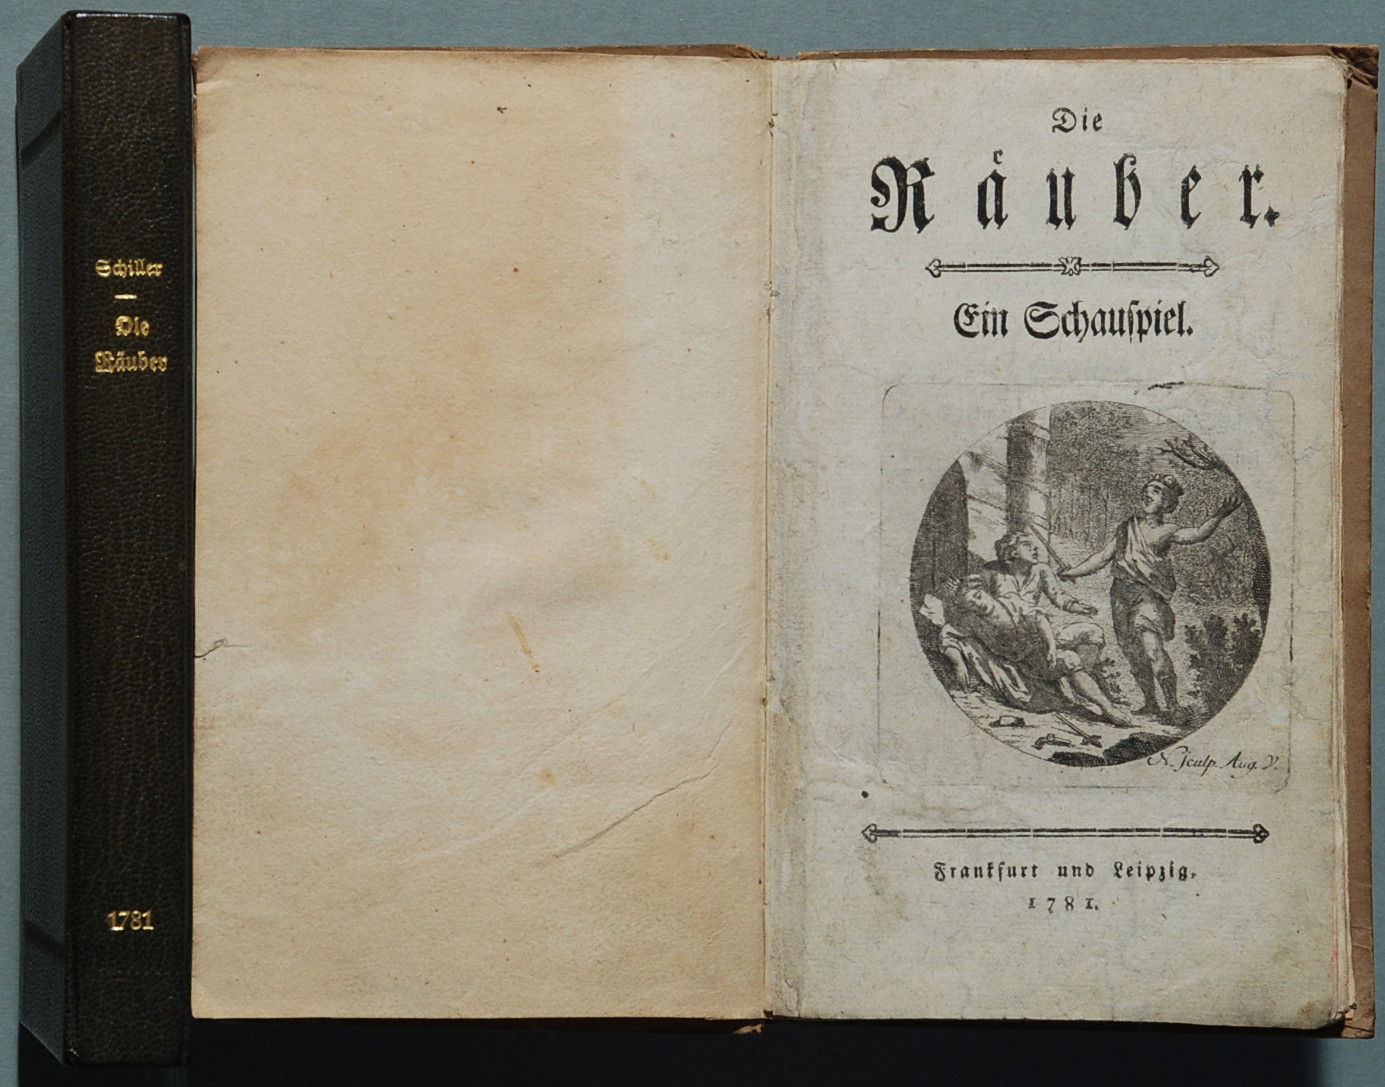 Prima edizione del "Räuber" di Schiller, 1781 ©Wikipedia CCBY3.0 https://de.wikipedia.org/wiki/Sturm_und_Drang#/media/Datei:Schiller_Die_R%C3%A4uber_1781.jpg